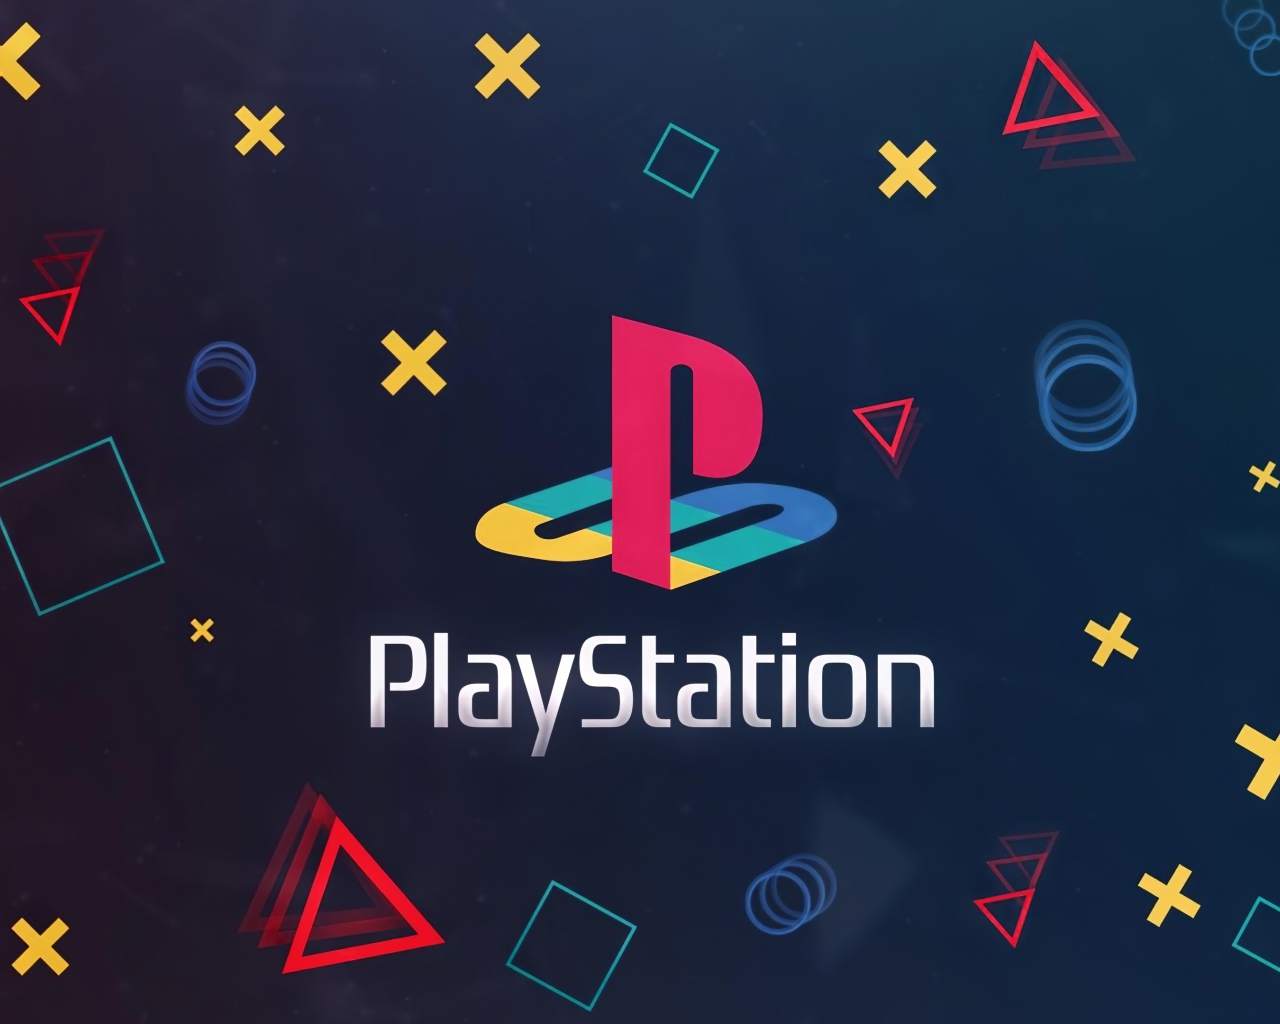 Логотип PlayStation на синем фоне с геометрическими фигурами